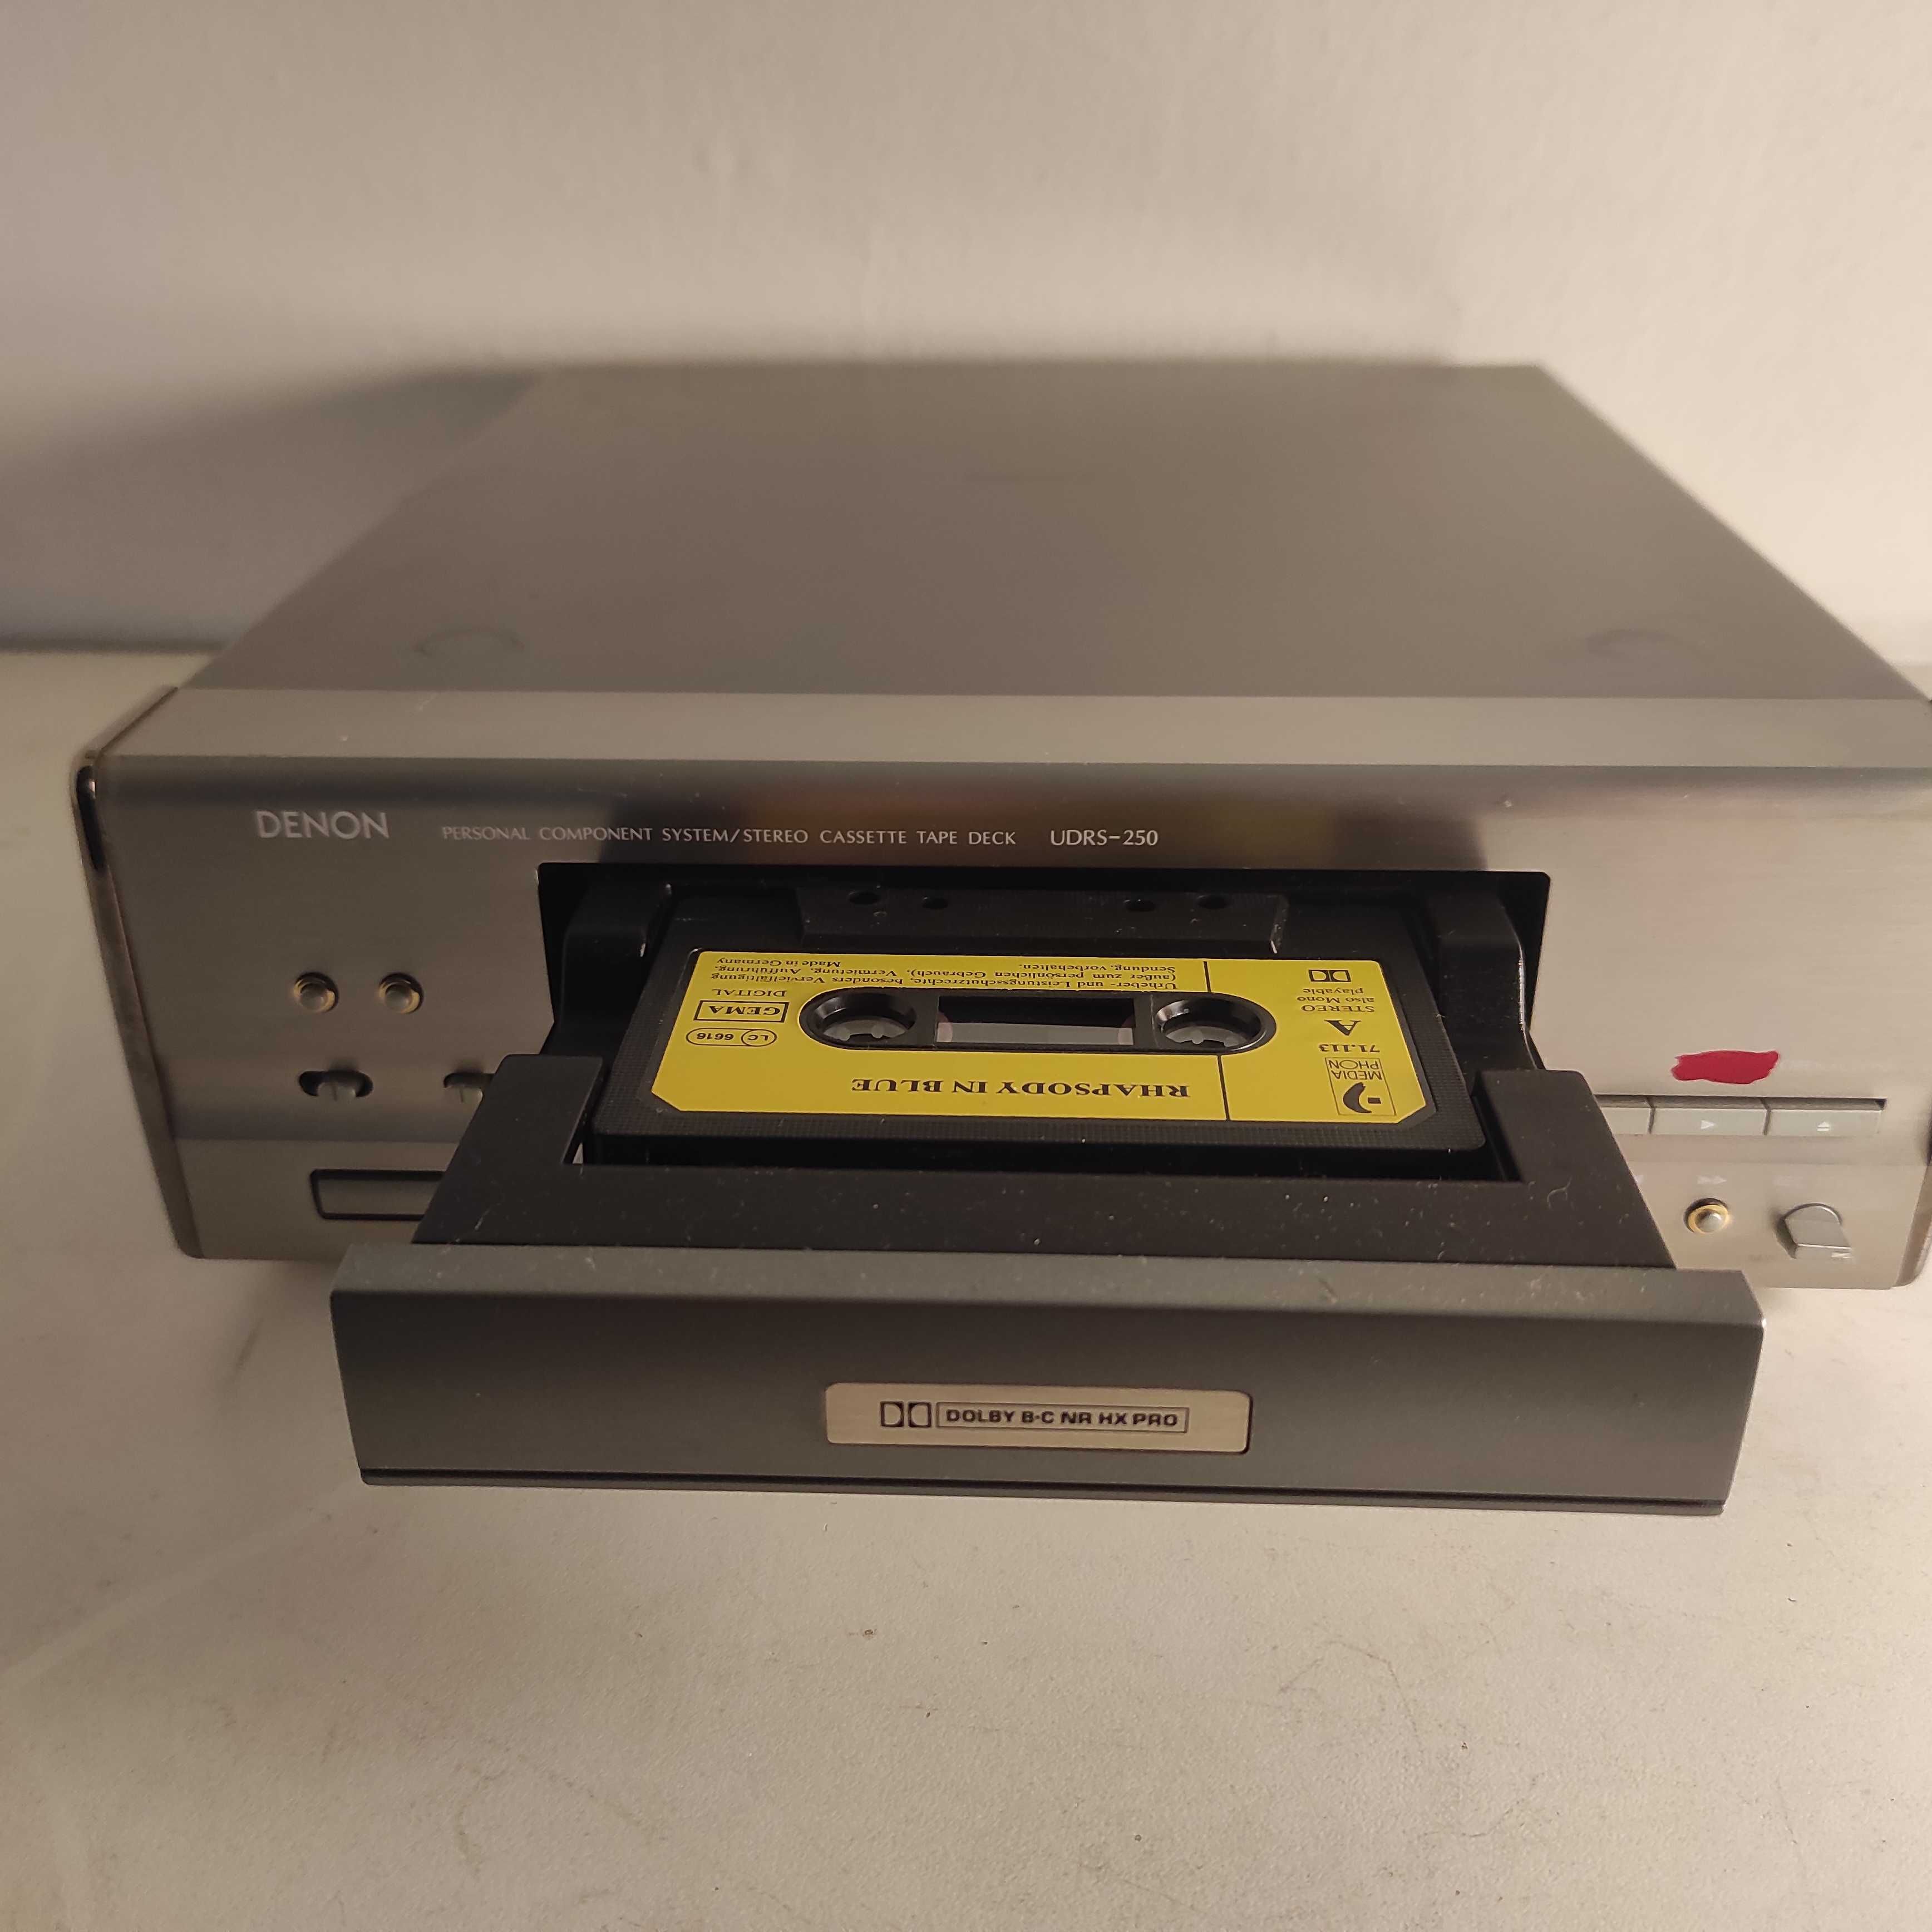 Magnetofon kasetowy Denon deck udrs 250 sprawny